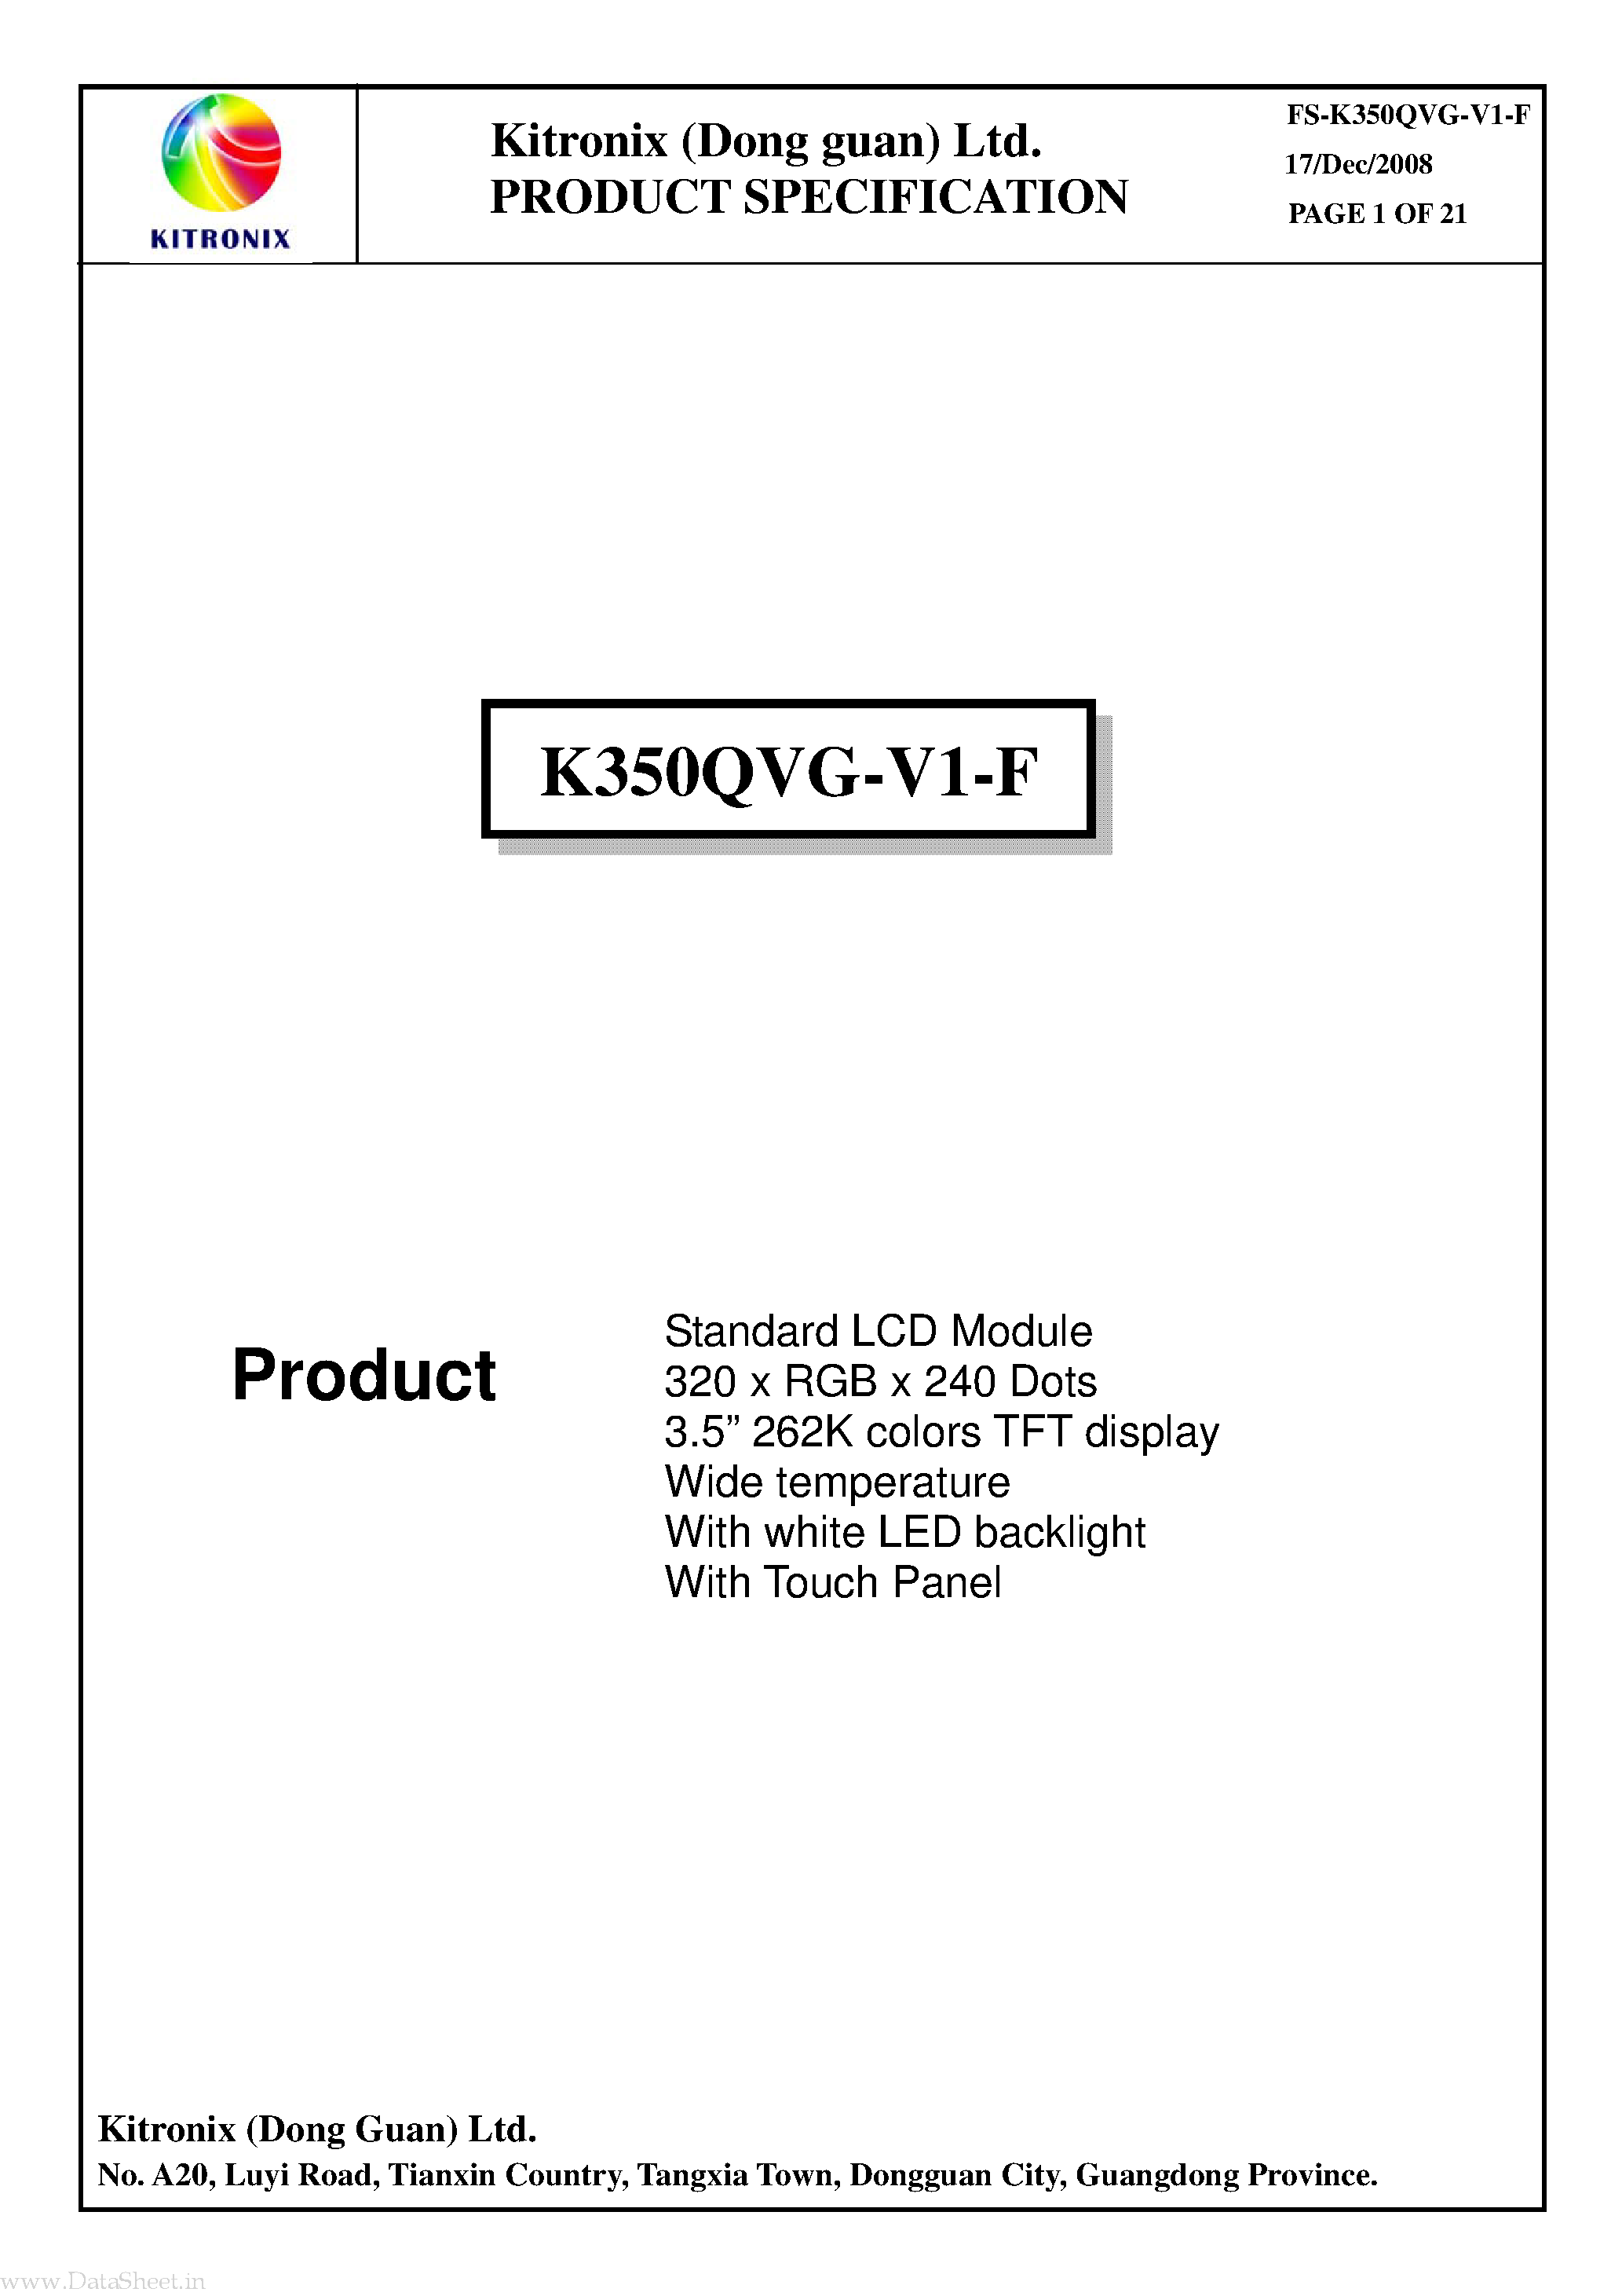 Datasheet FS-K350QVG-V1-F - Standard LCD Module page 2